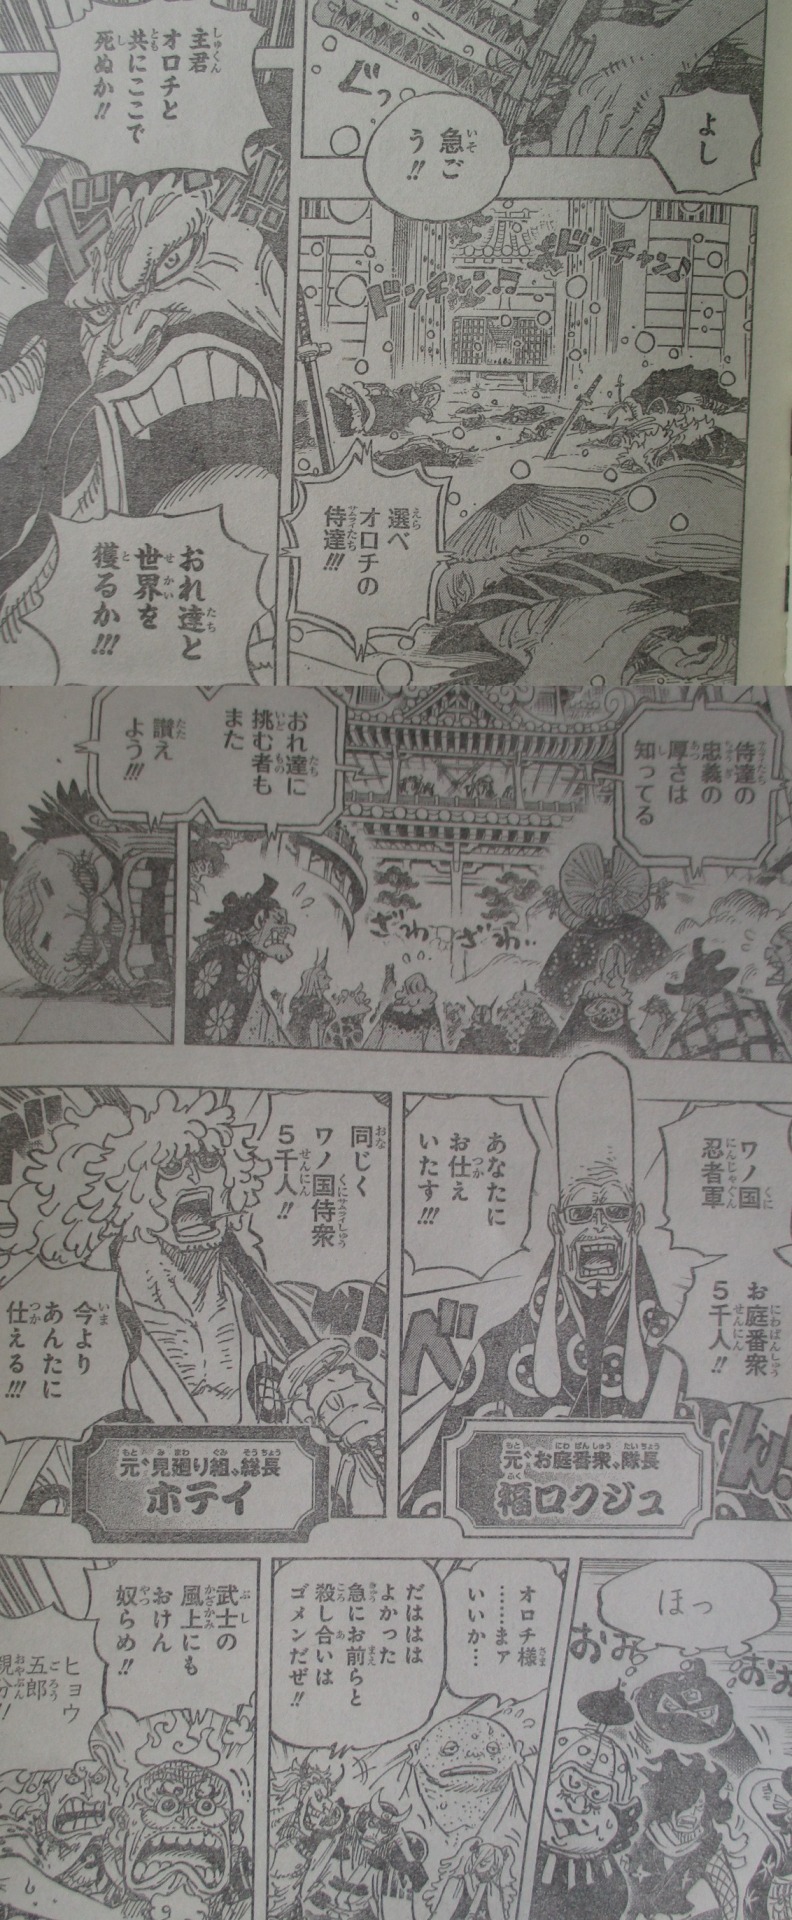 One Piece Manga 986 Explore Tumblr Posts And Blogs Tumgir